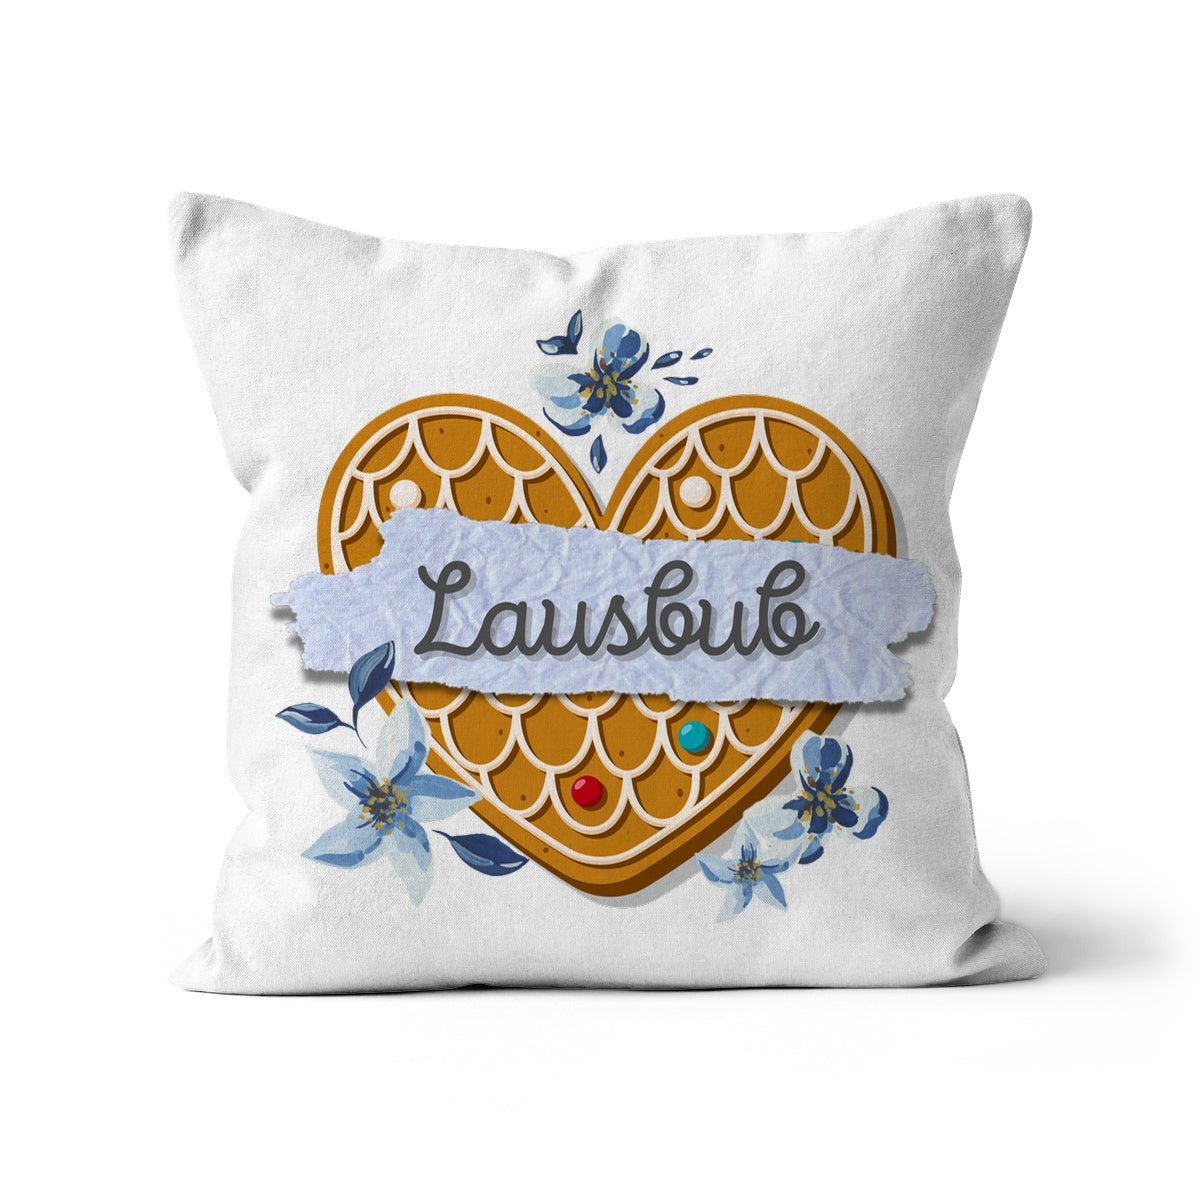 Bavarian Cushion, Retro Gingerbread Heart & Floral print "Lausbub", blue - incl. filling - Bavari Shop - Bavarian Outfits, Dirndl, Lederhosen & Accessories